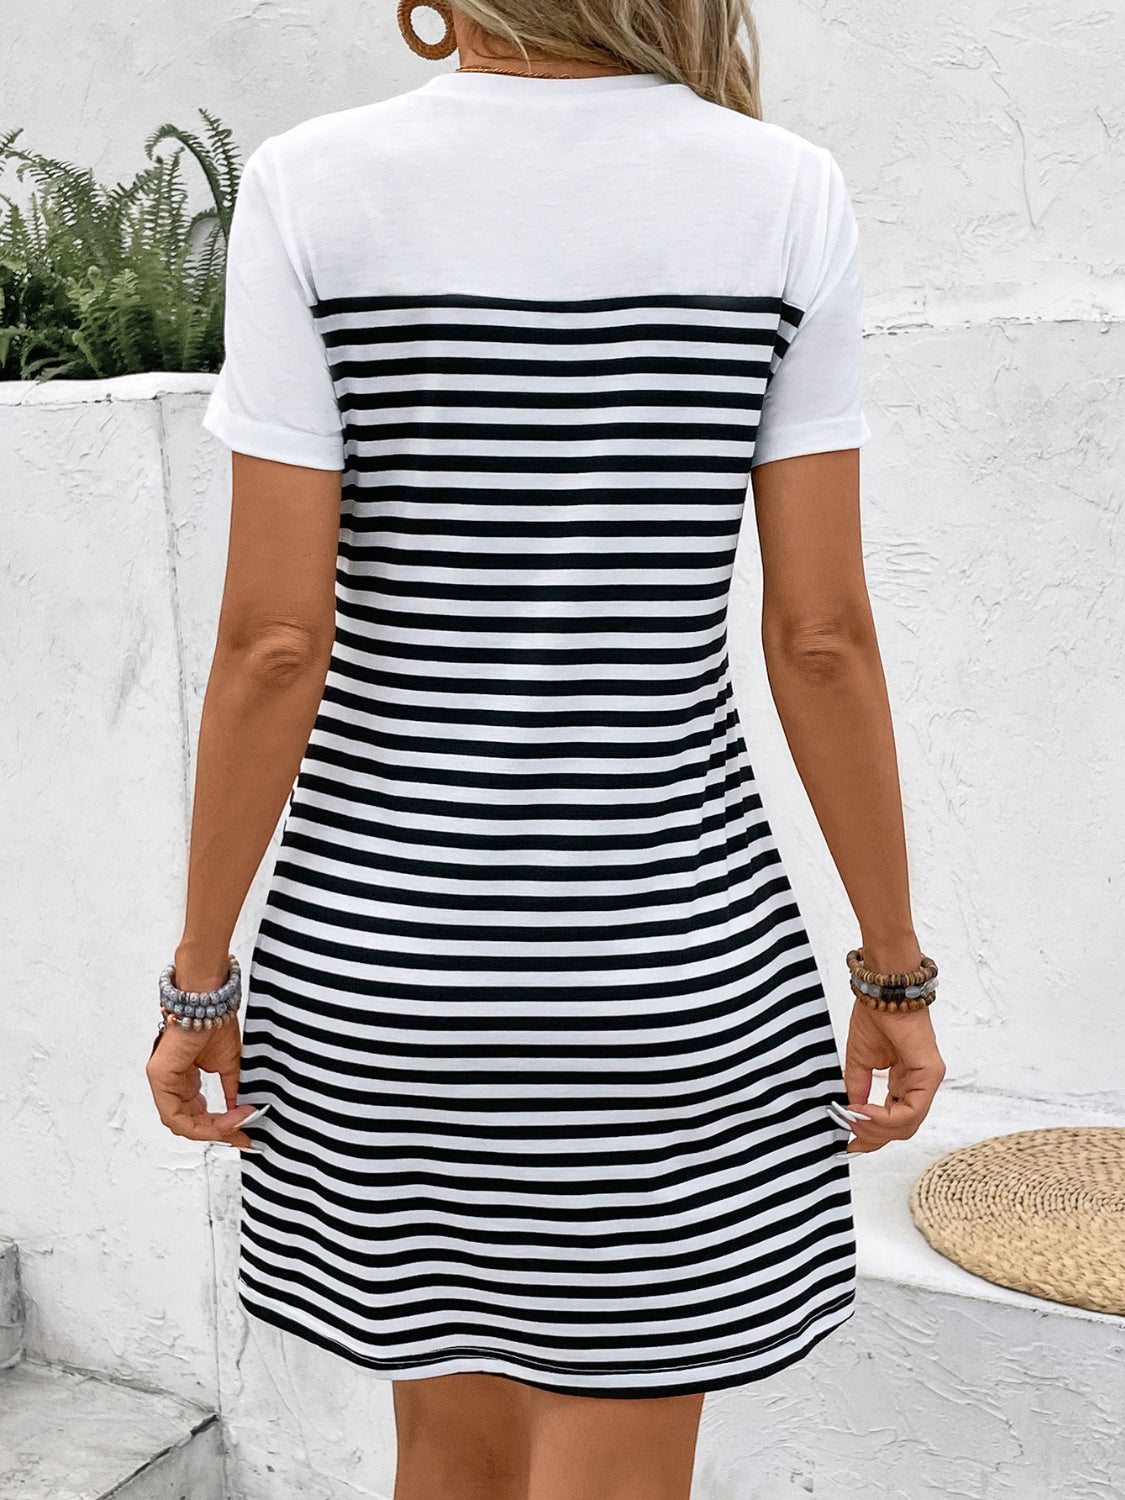 Beach Wedding Guest Attire: Striped Round Neck Short Sleeve Mini Dress for Women